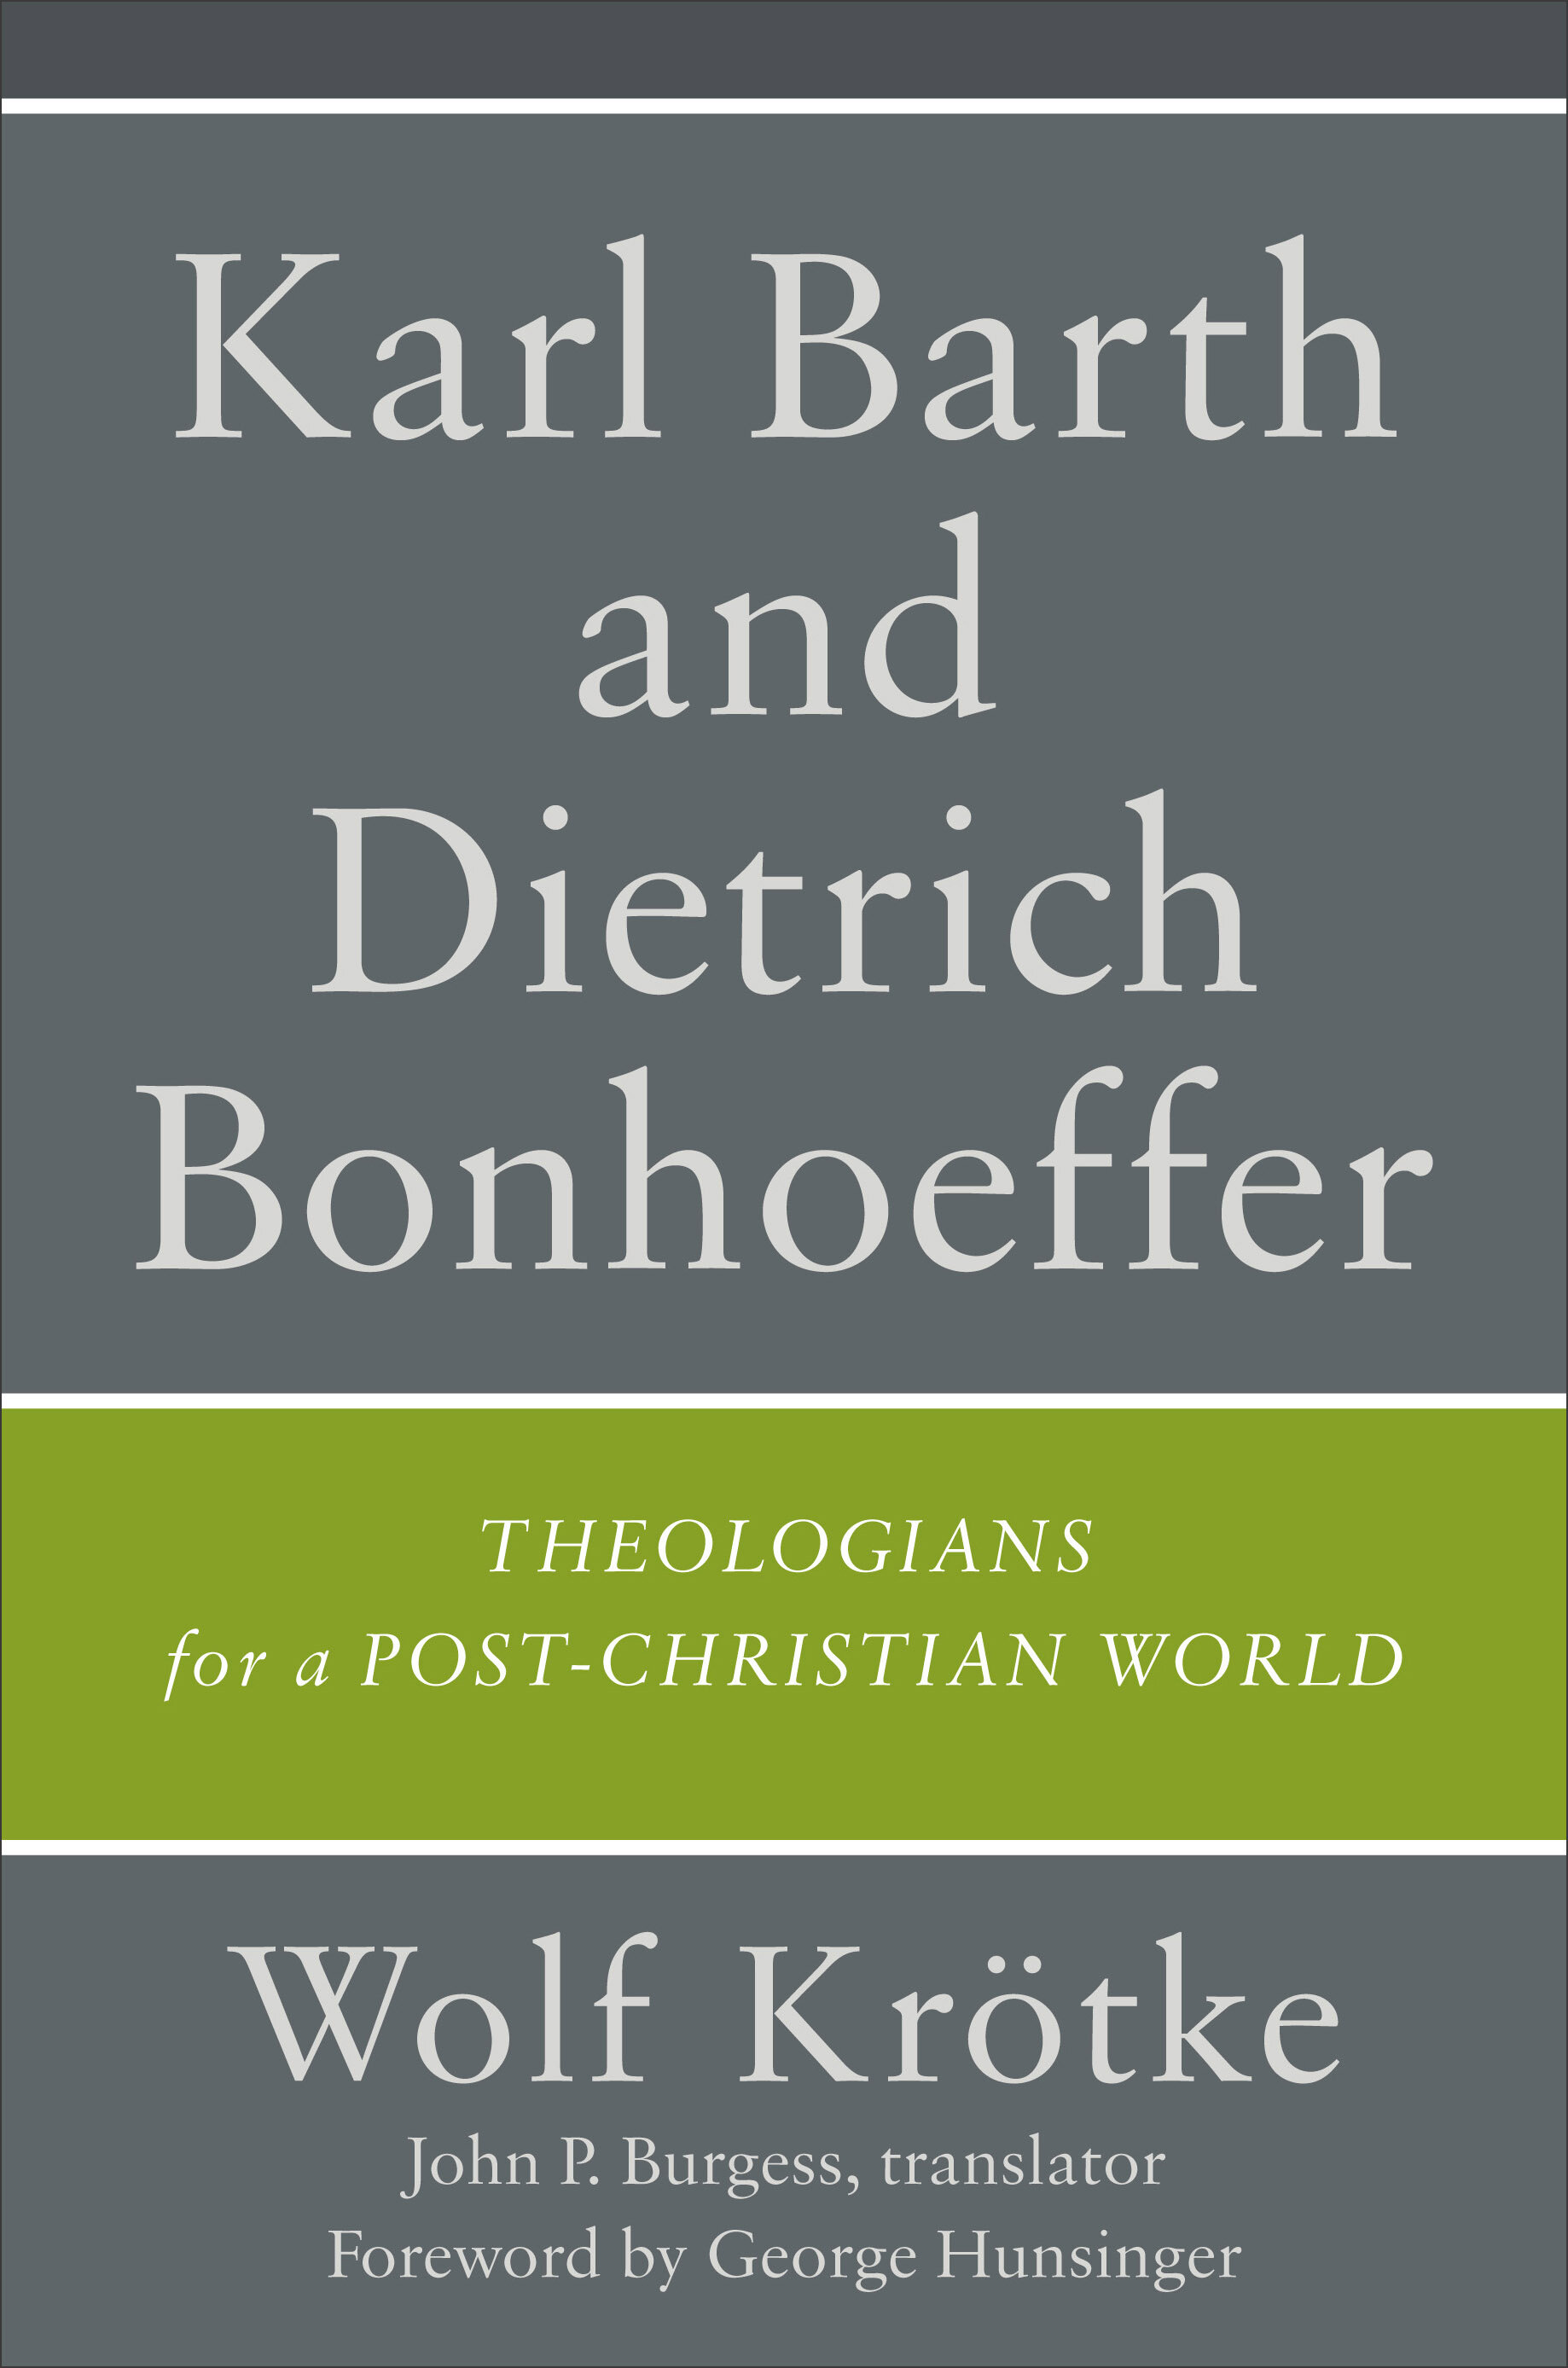 Karl Barth and Dietrich Bonhoeffer: Theologians for a Post-Christian World